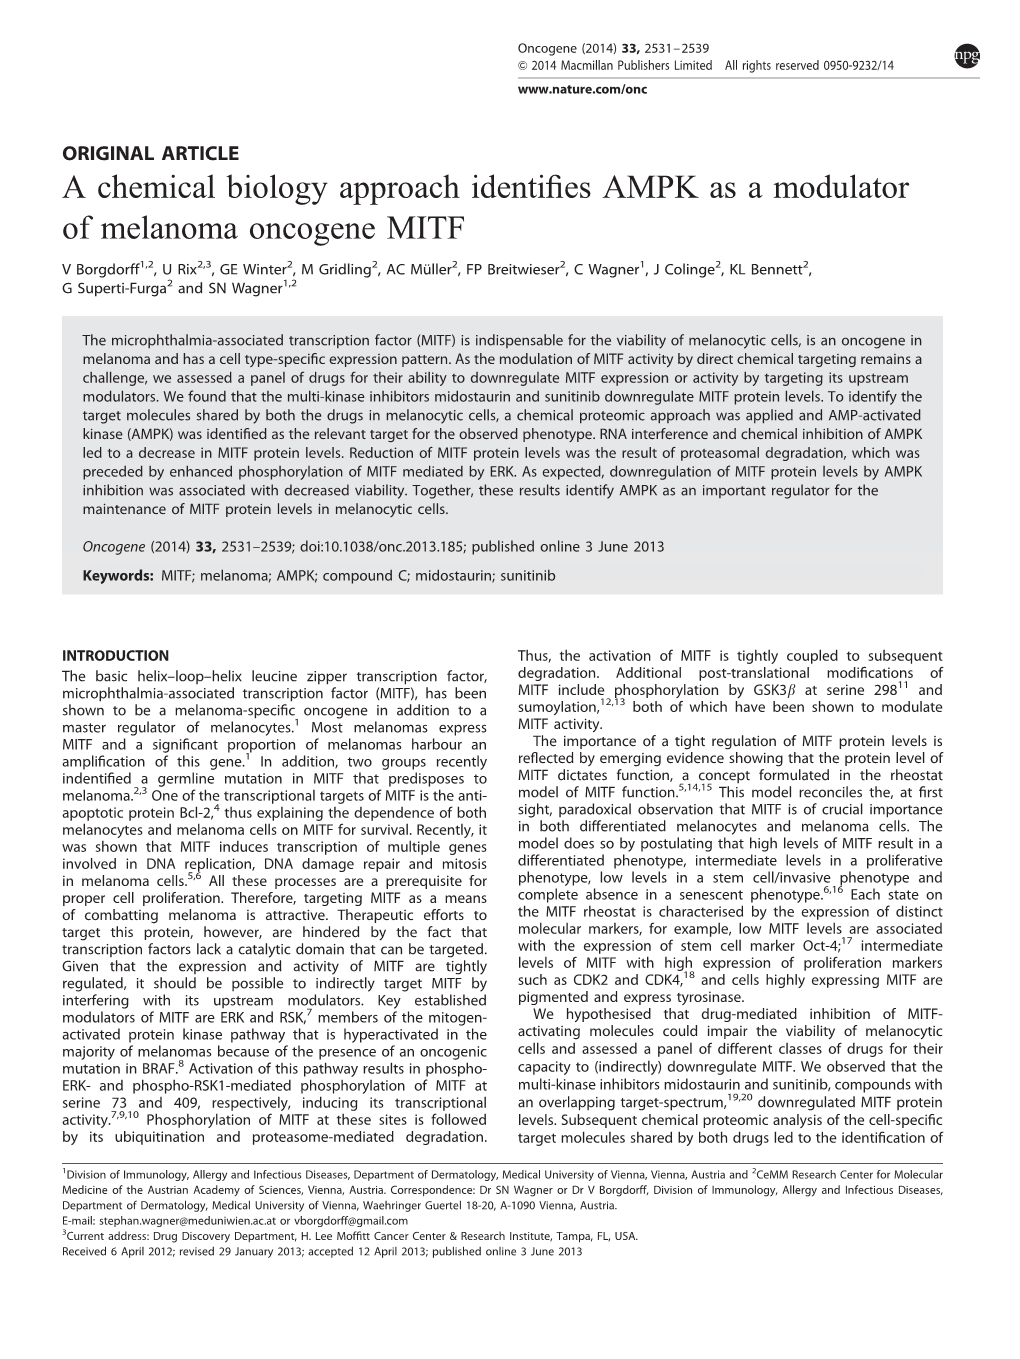 A Chemical Biology Approach Identifies AMPK As a Modulator Of